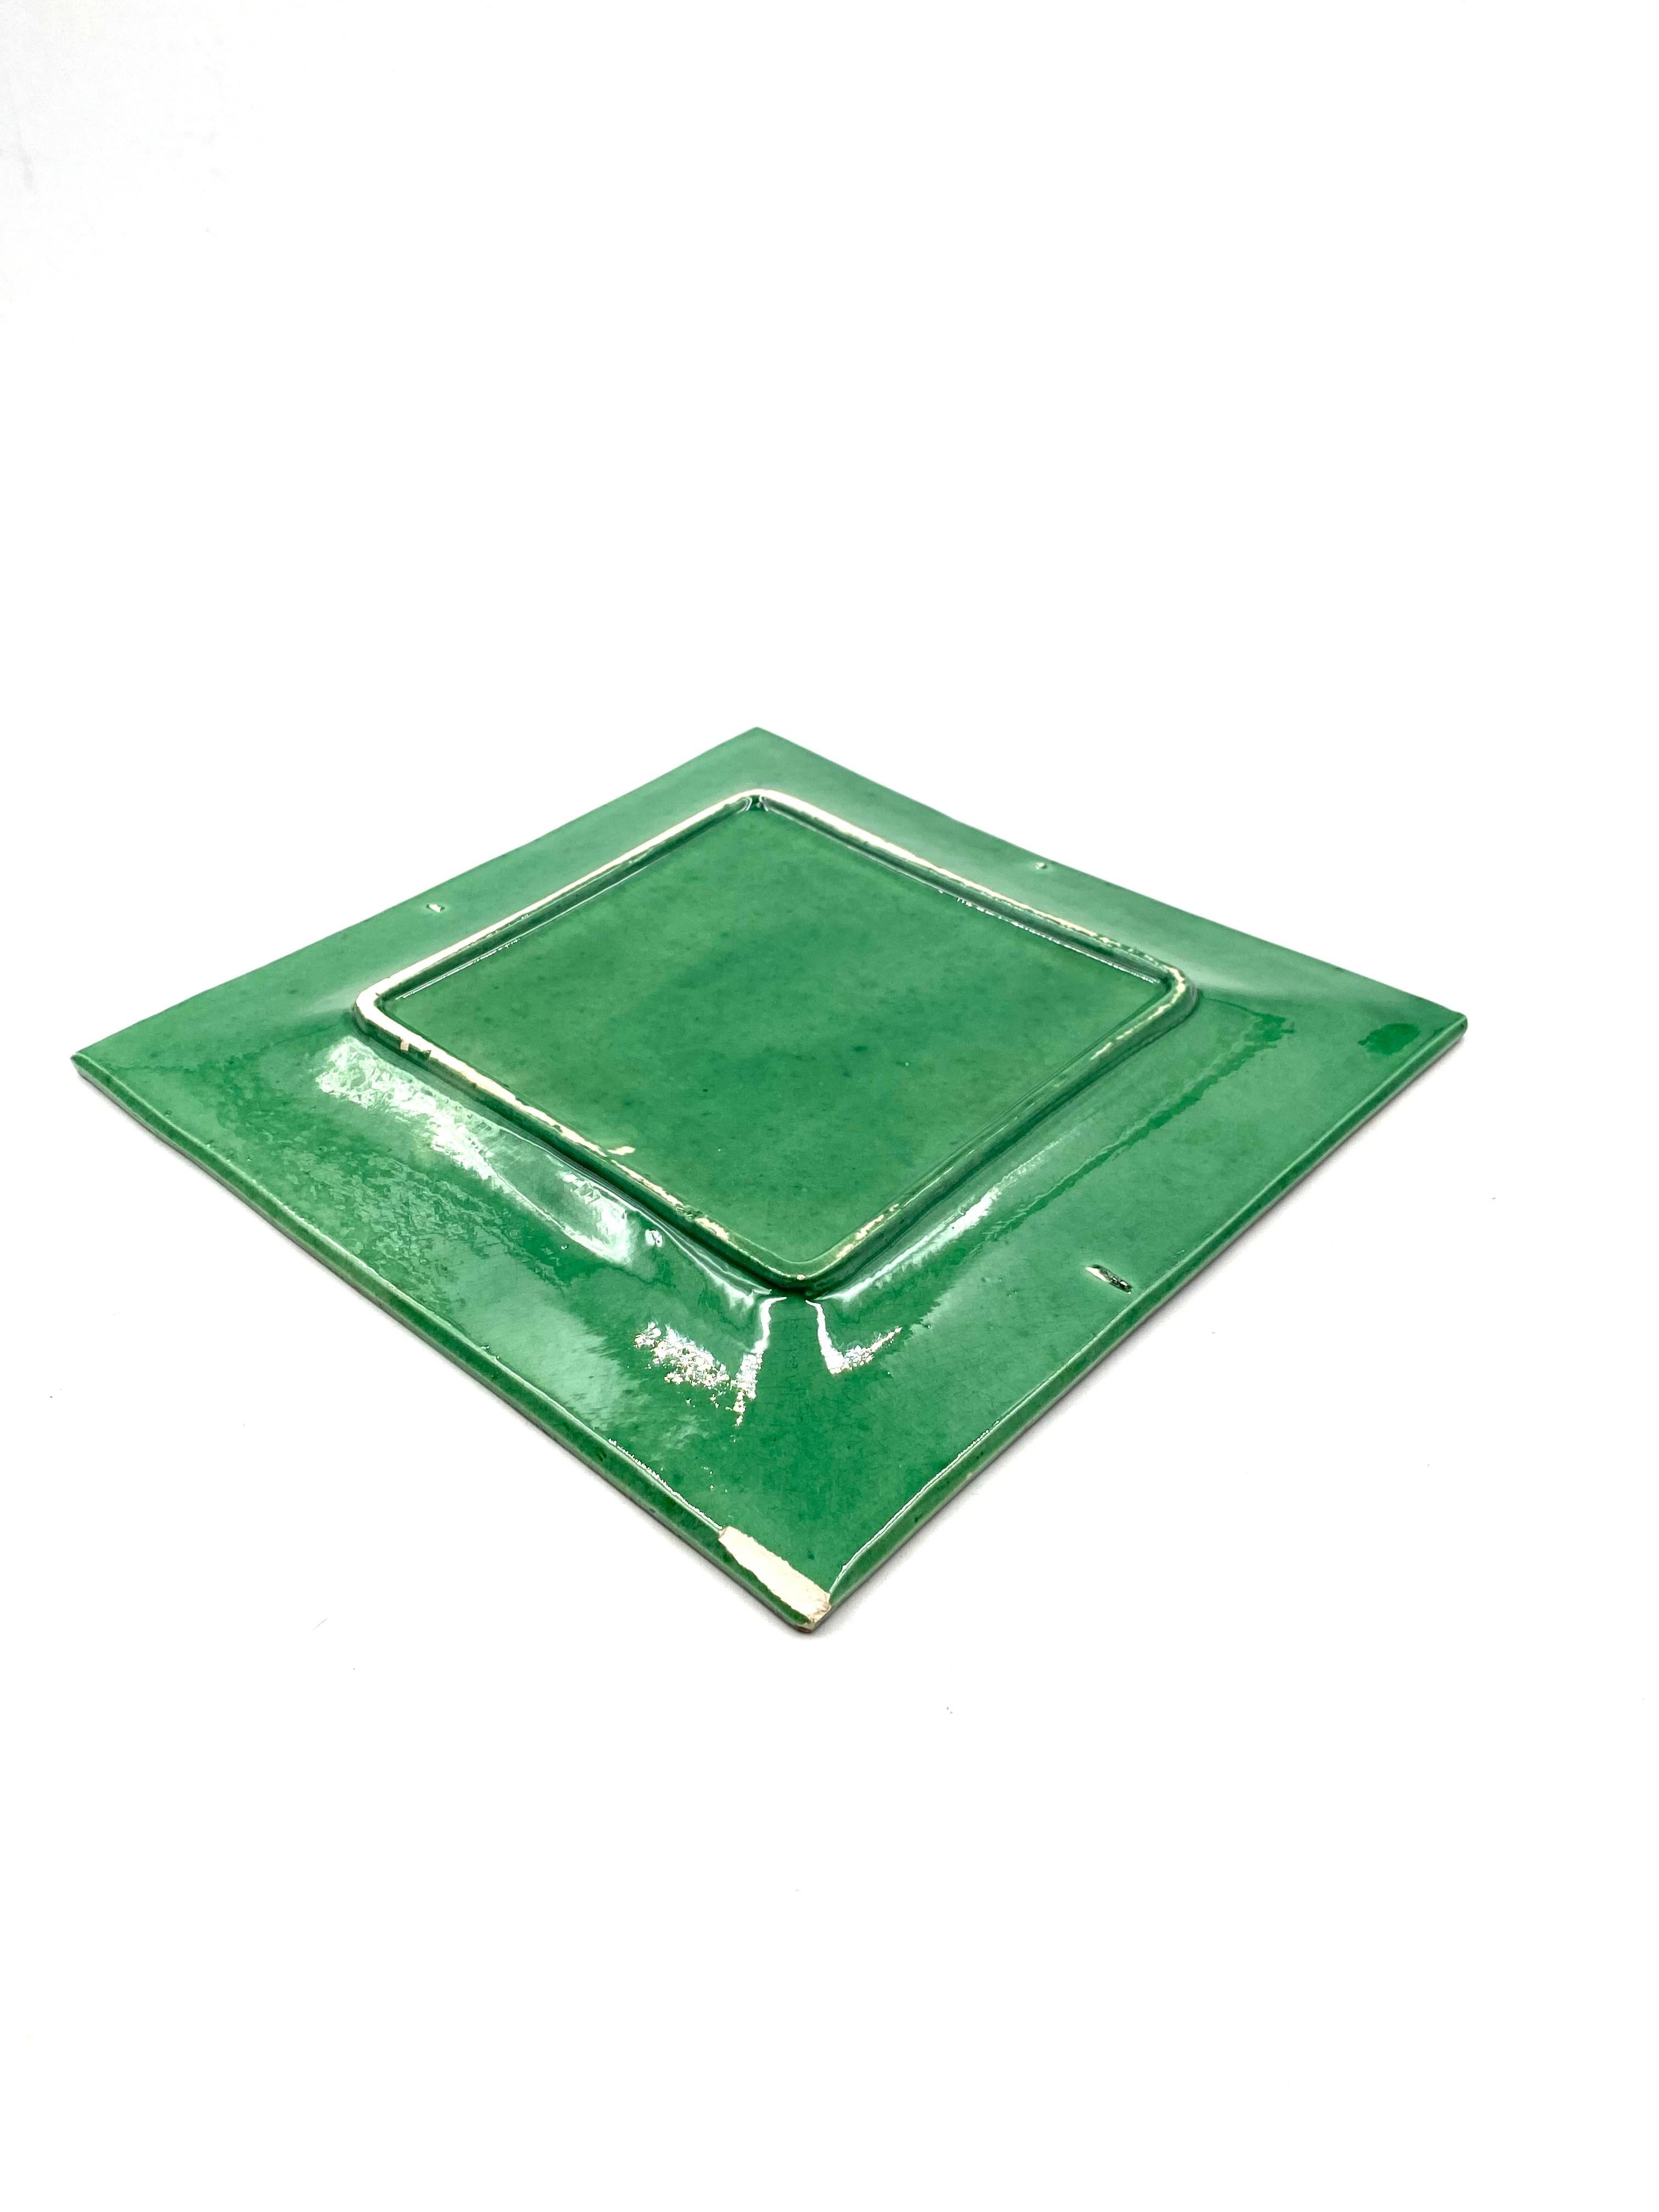 Green Fire-Glazed ceramic vide poche, France, ca. 1960 For Sale 7